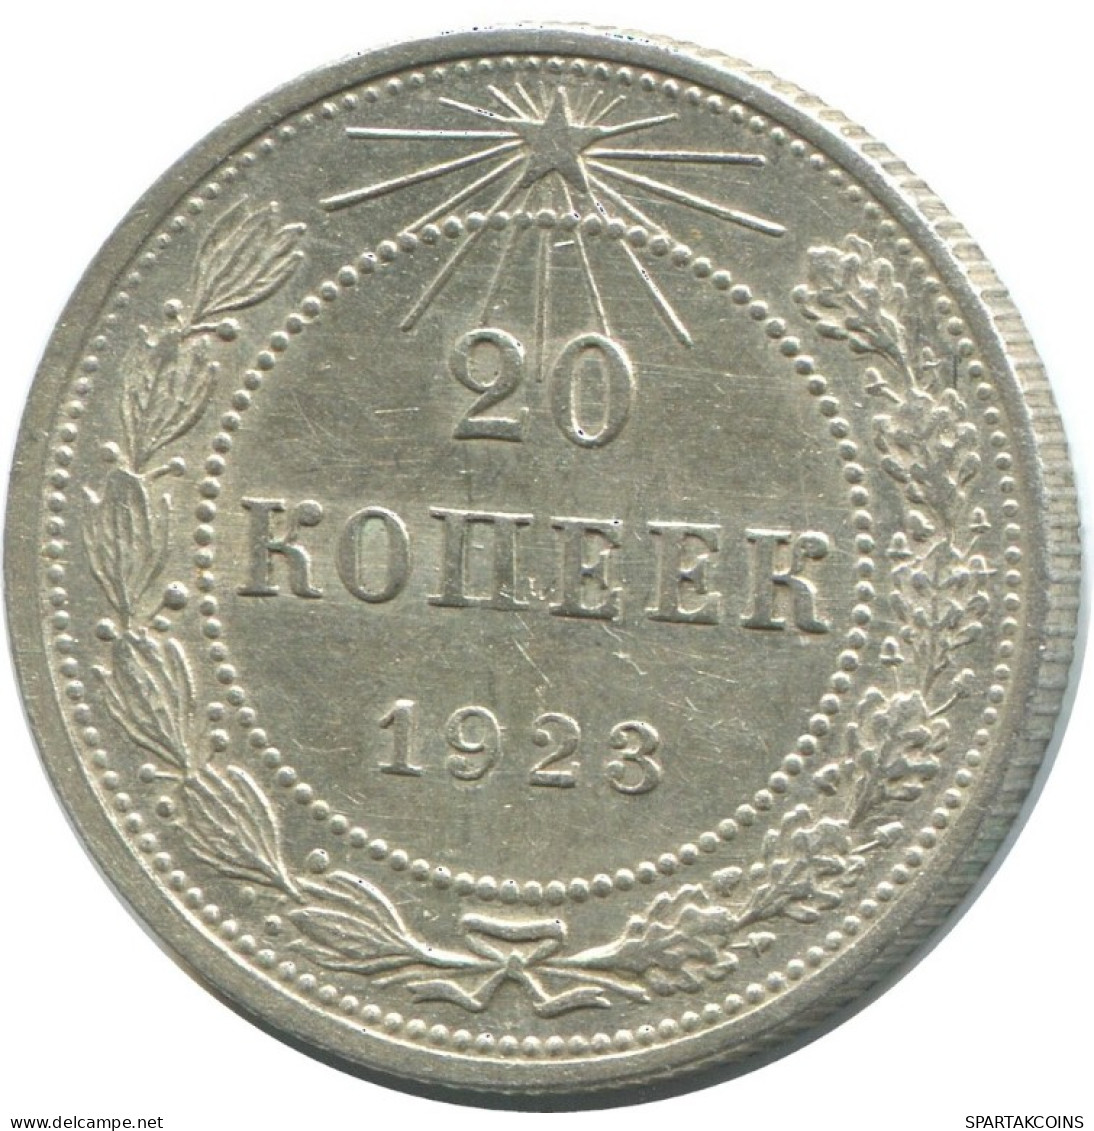 20 KOPEKS 1923 RUSSIA RSFSR SILVER Coin HIGH GRADE #AF654.U.A - Rusia